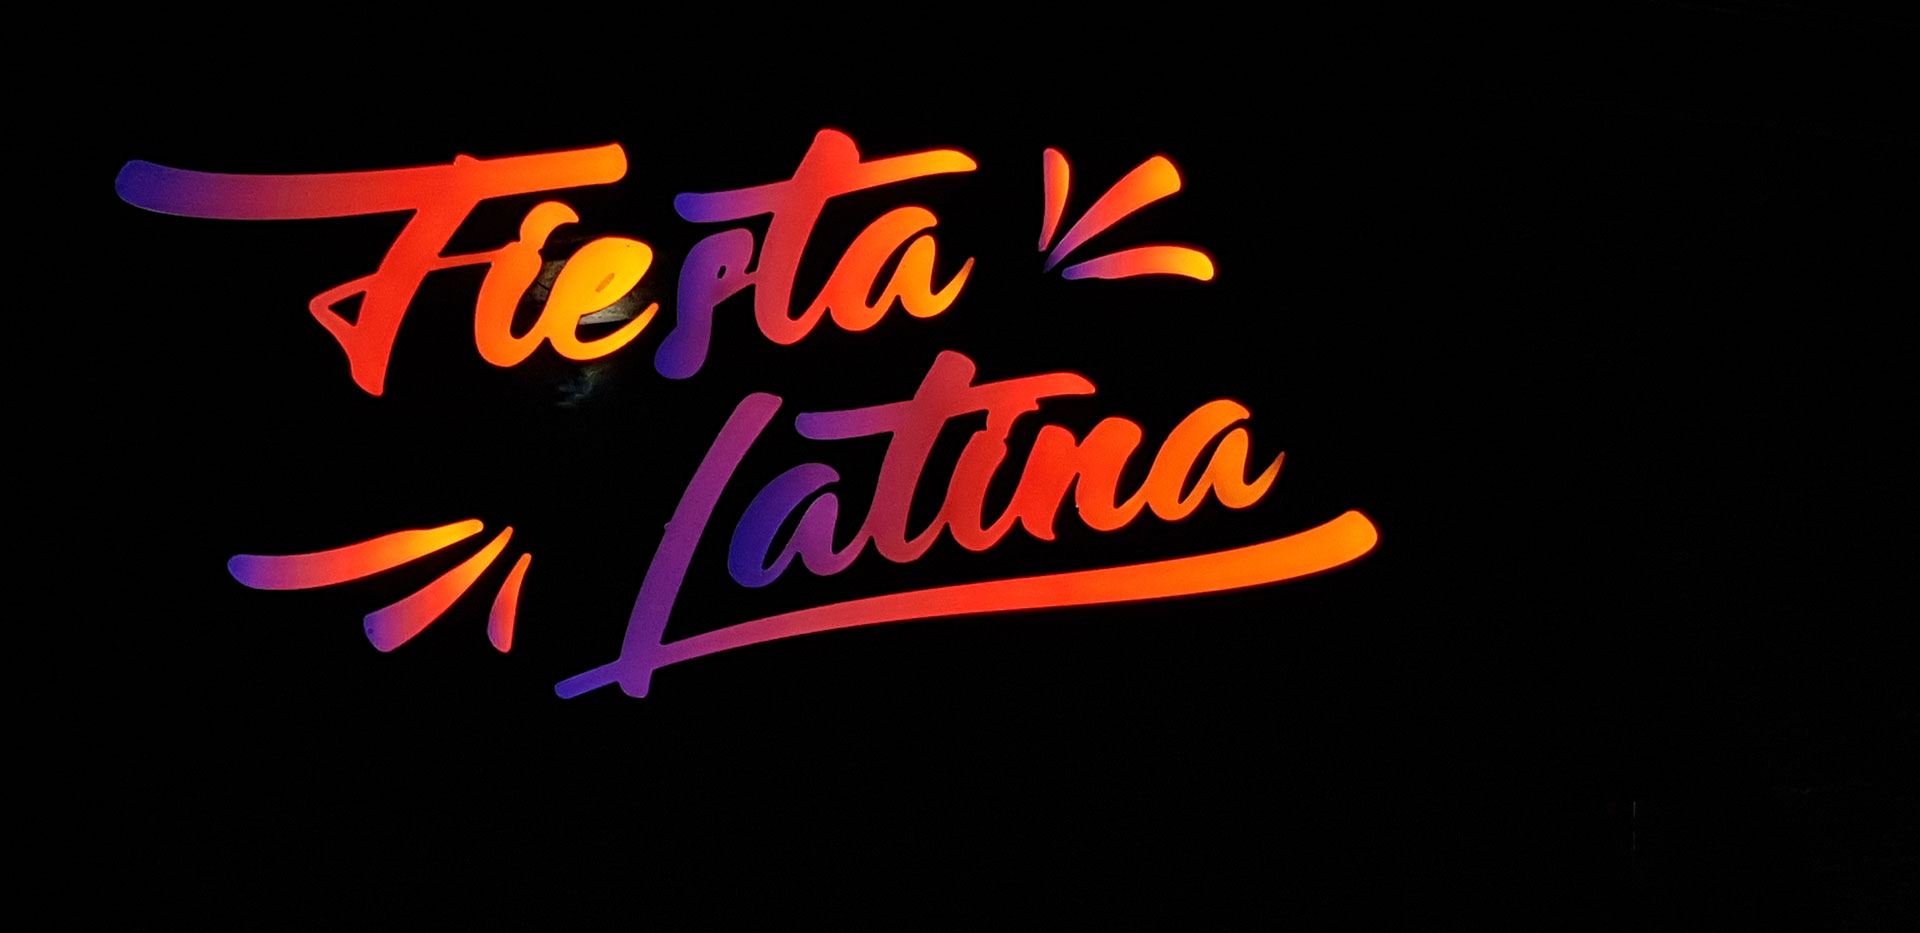 fiesta_latina_logo